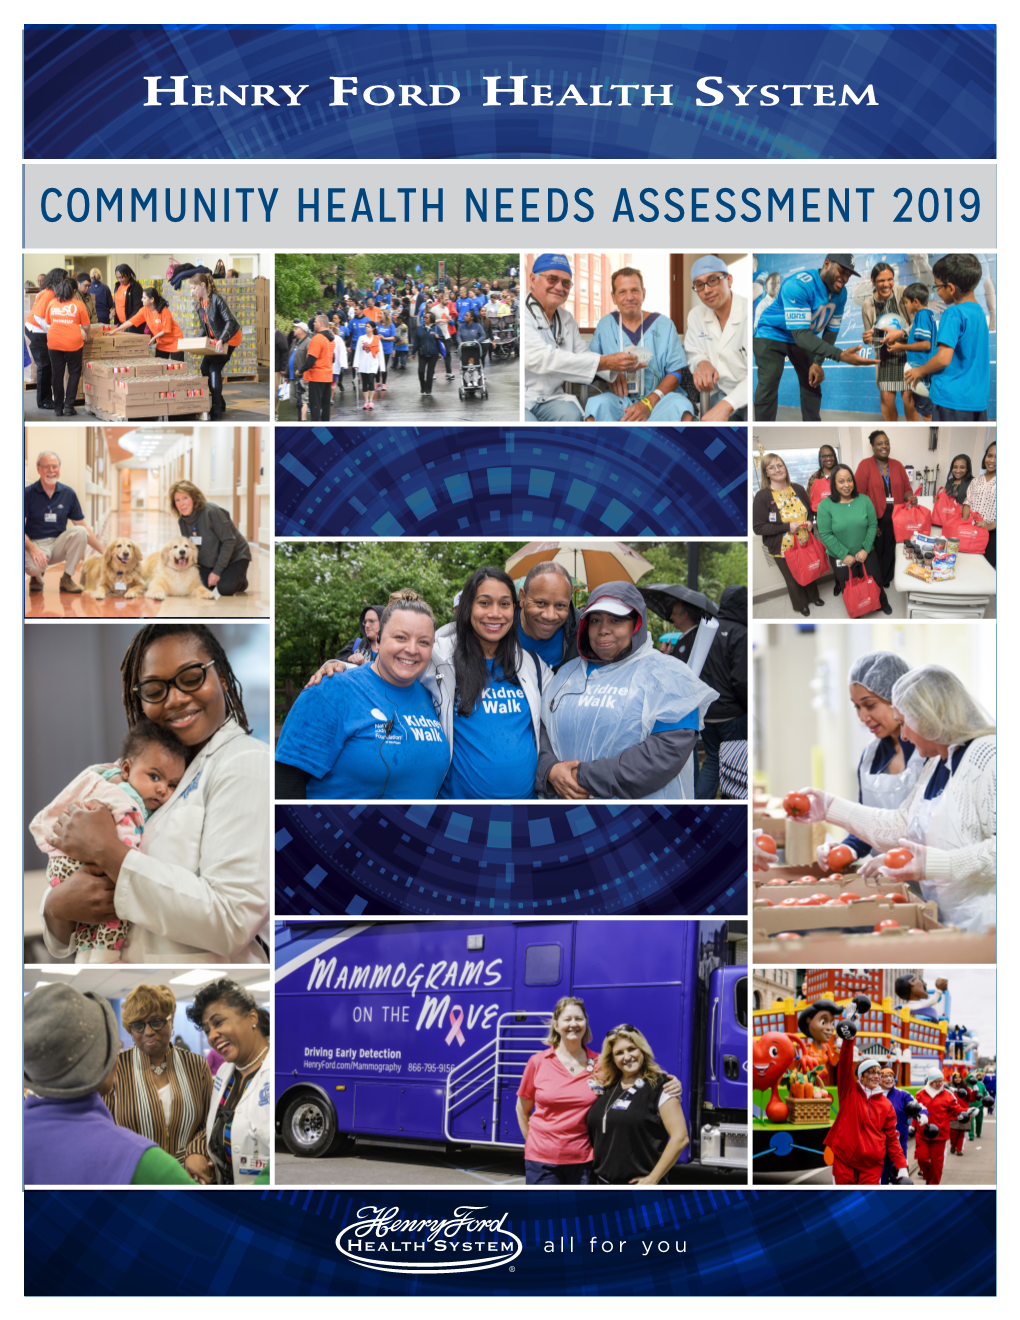 COMMUNITY HEALTH NEEDS ASSESSMENT 2019 December 2019